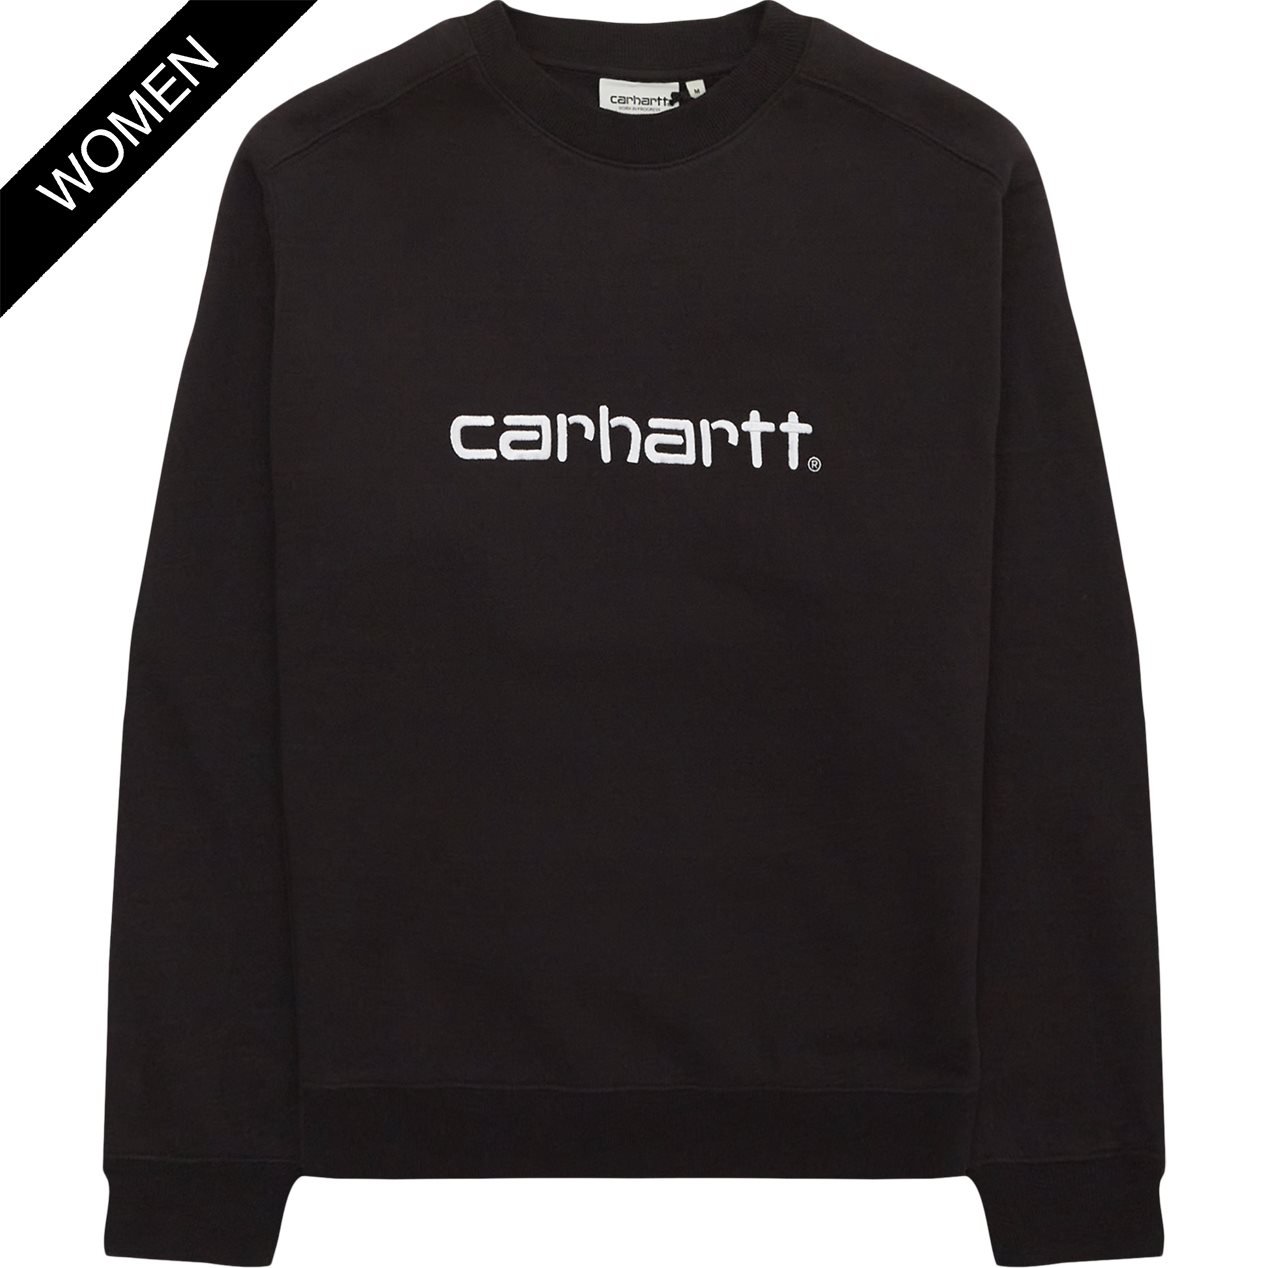 Carhartt WIP Women Sweatshirts W CARHARTT SWEAT I032694 Black